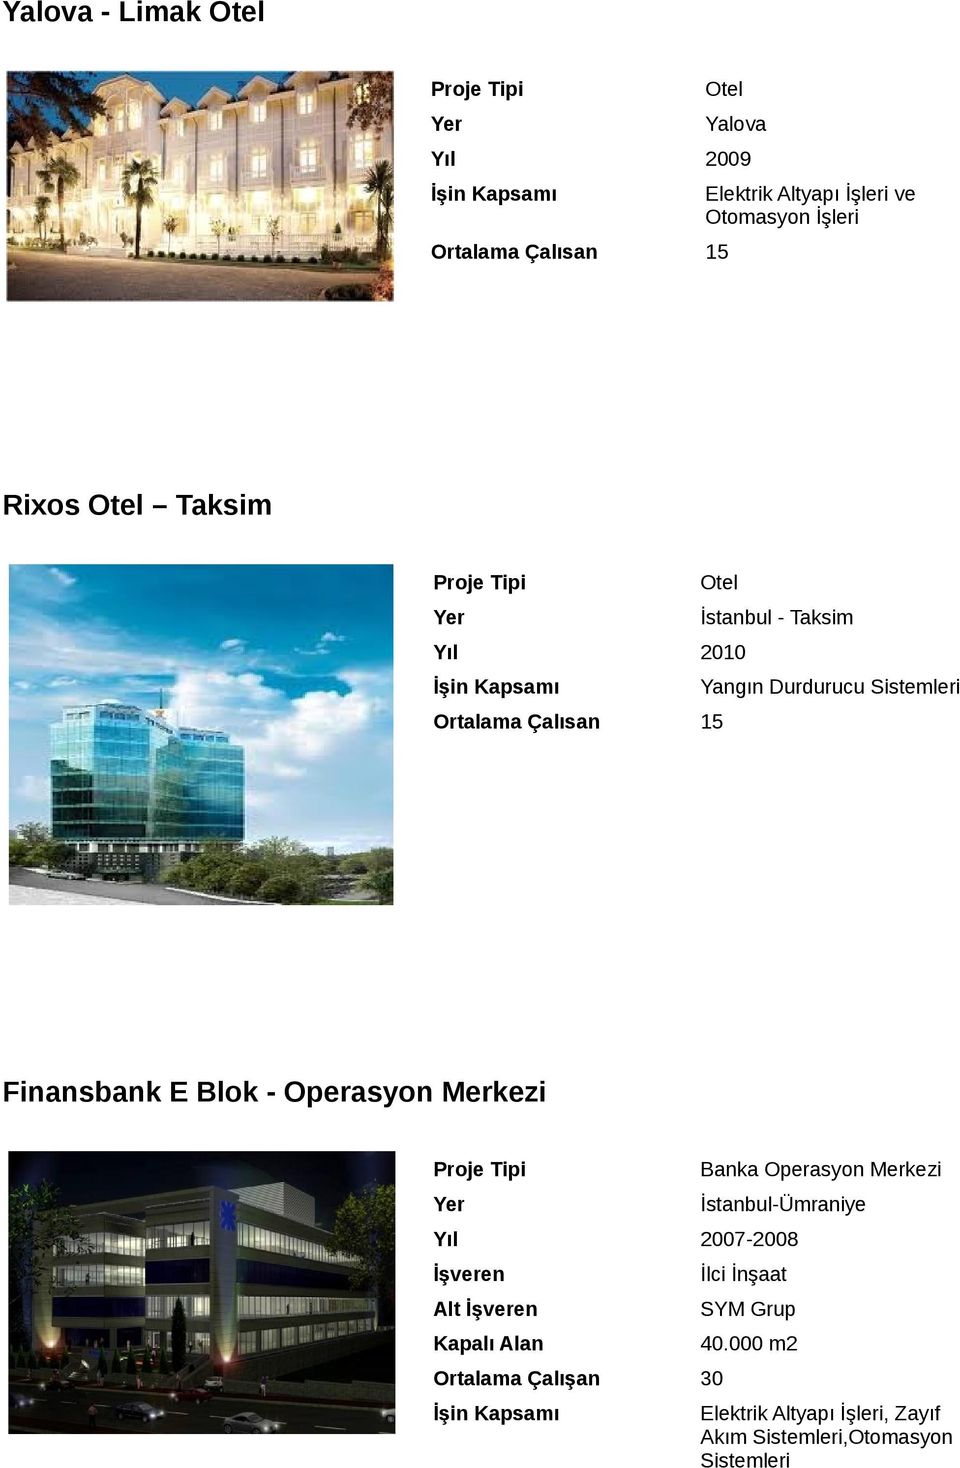 Finansbank E Blok - Operasyon Merkezi Banka Operasyon Merkezi -Ümraniye Yıl 2007-2008 Alt